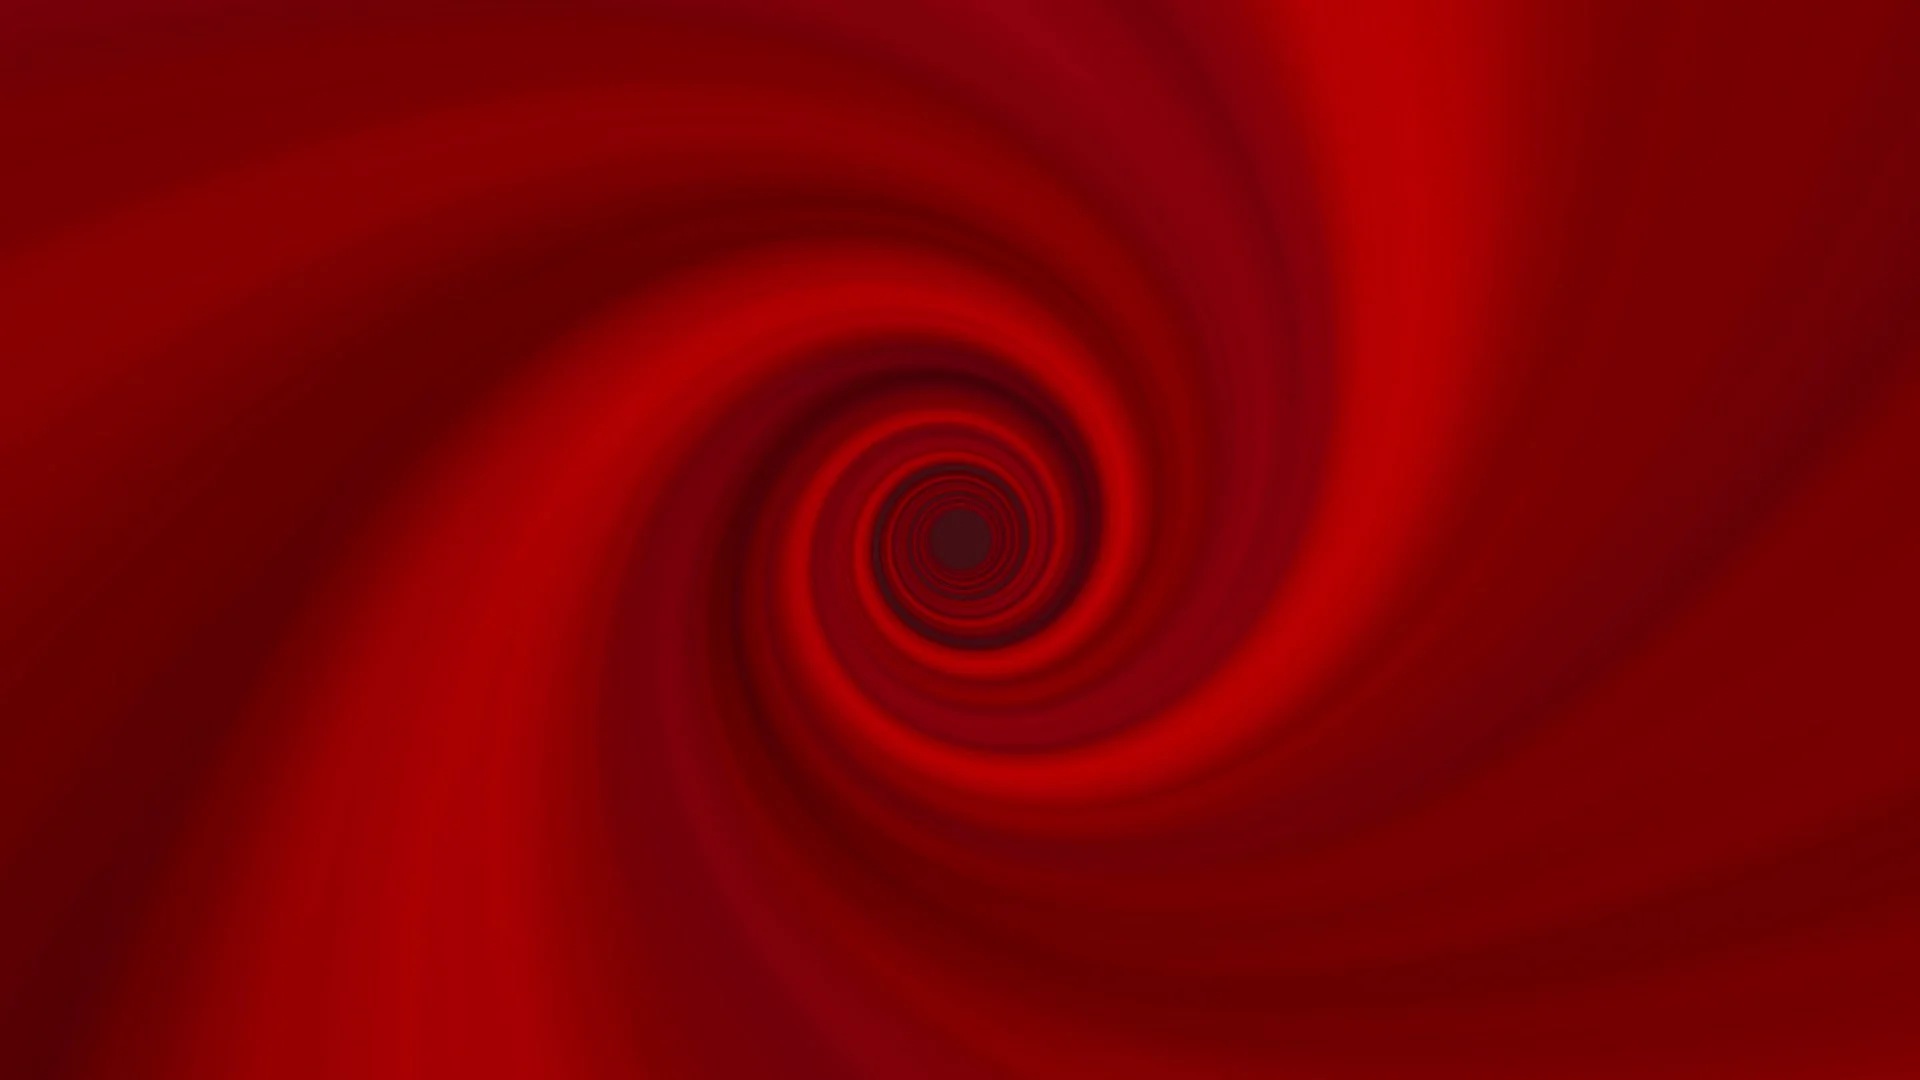 red swirl background